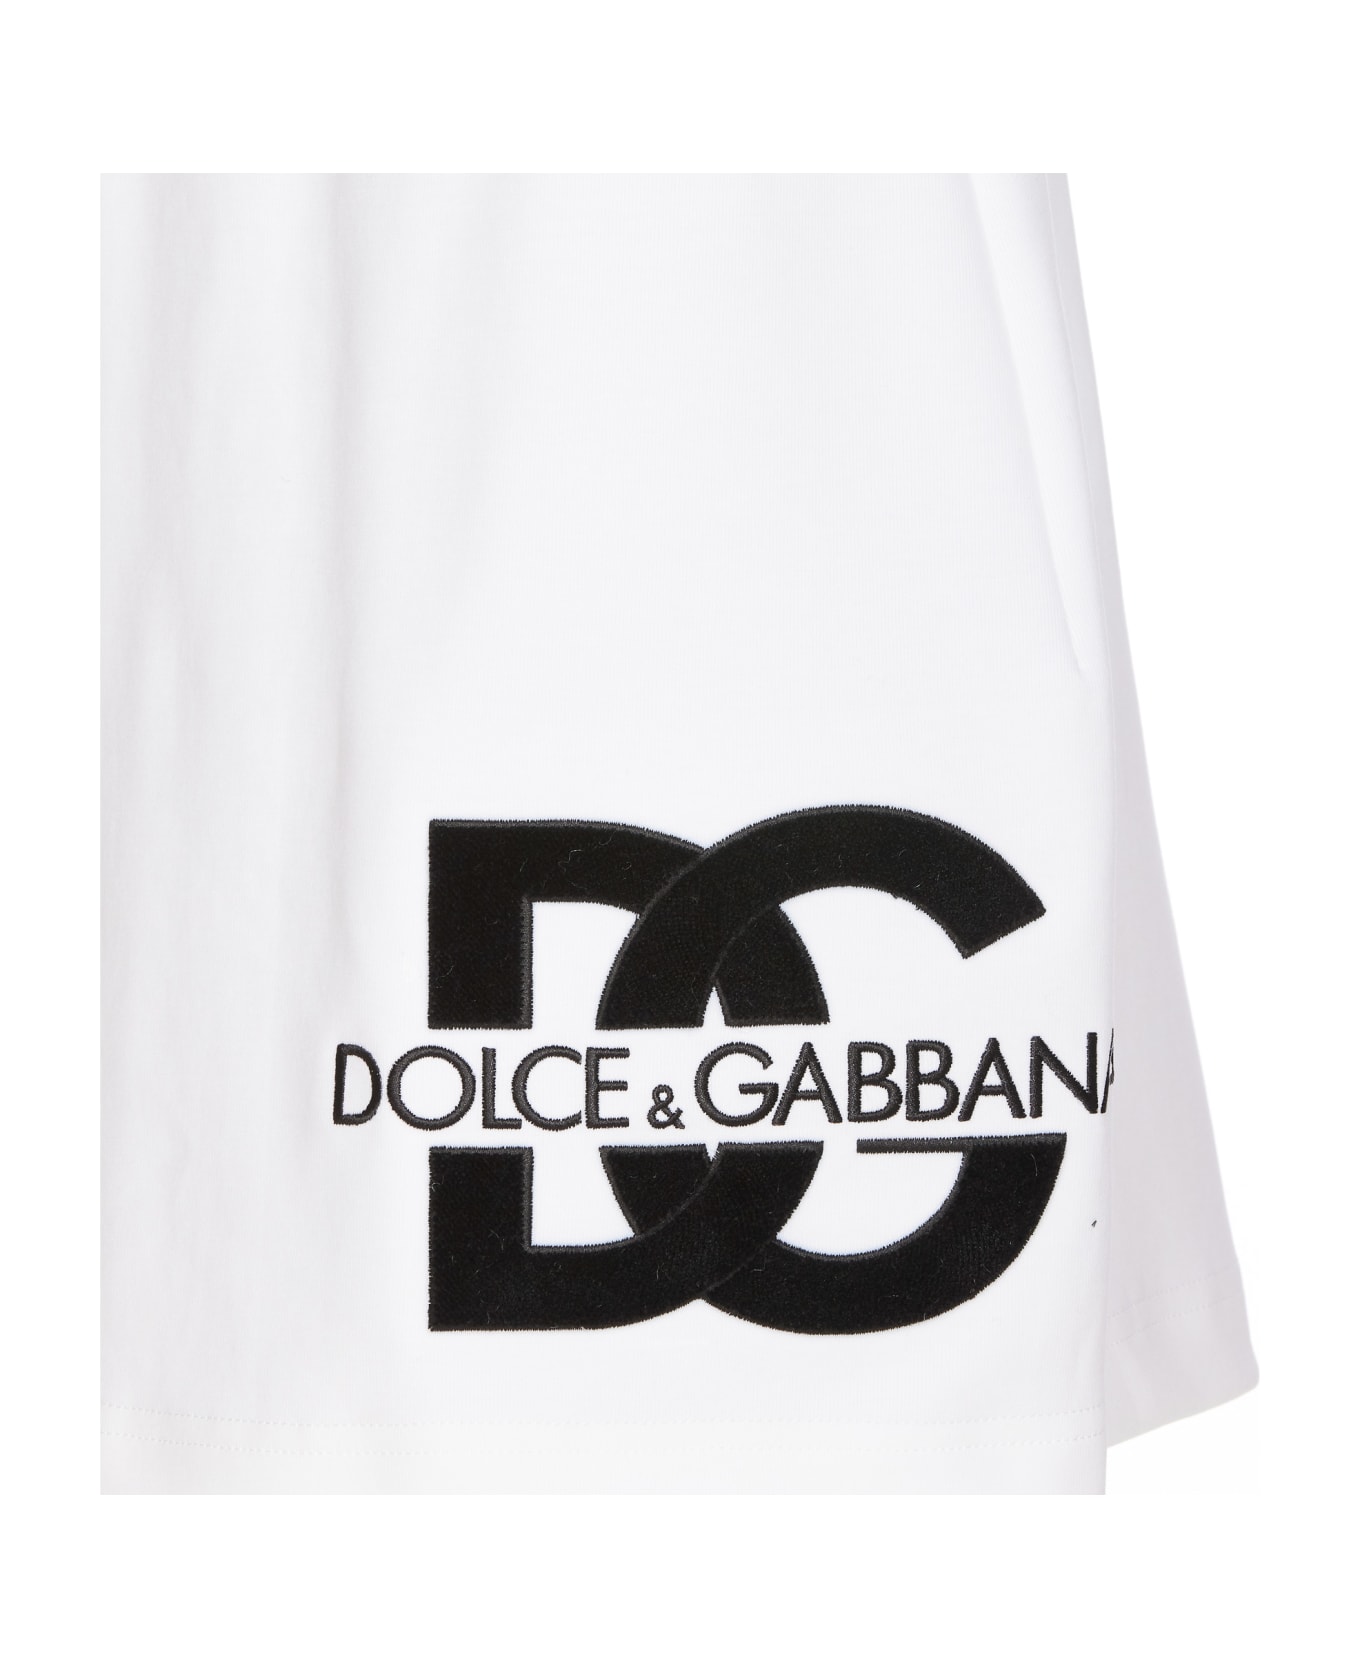 Dolce & Gabbana Cotton Shorts - White